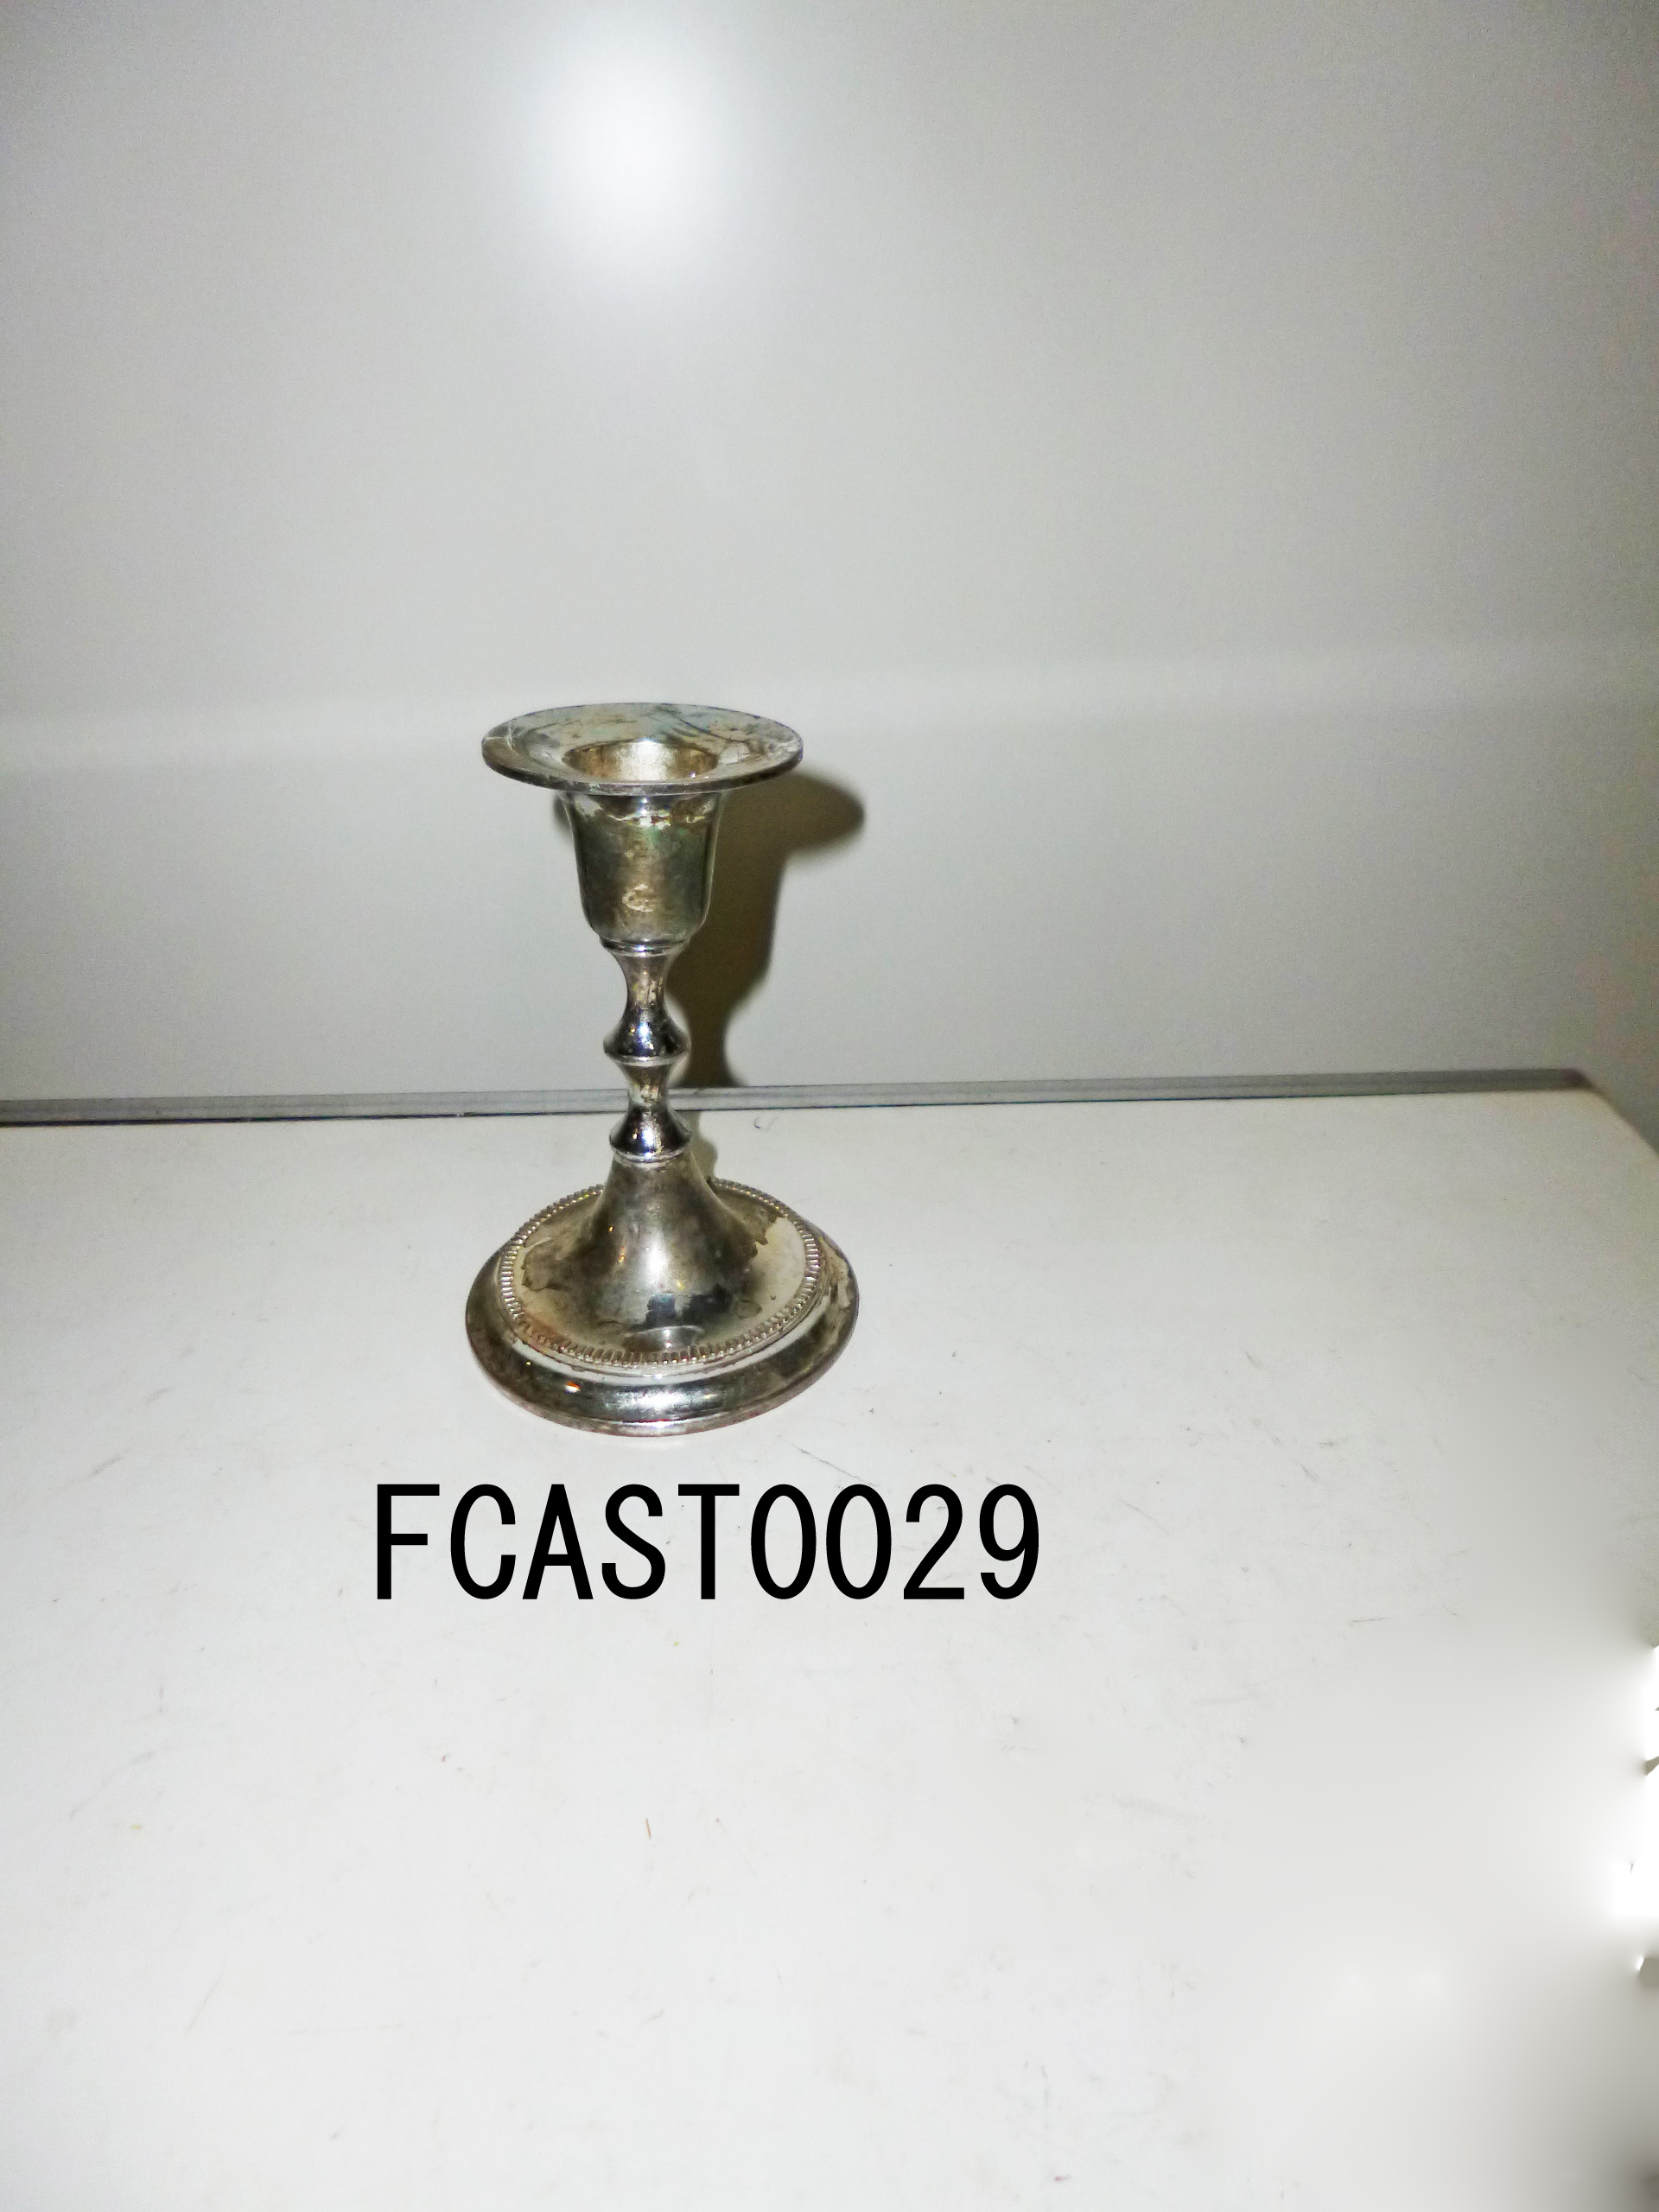 FCAST0029